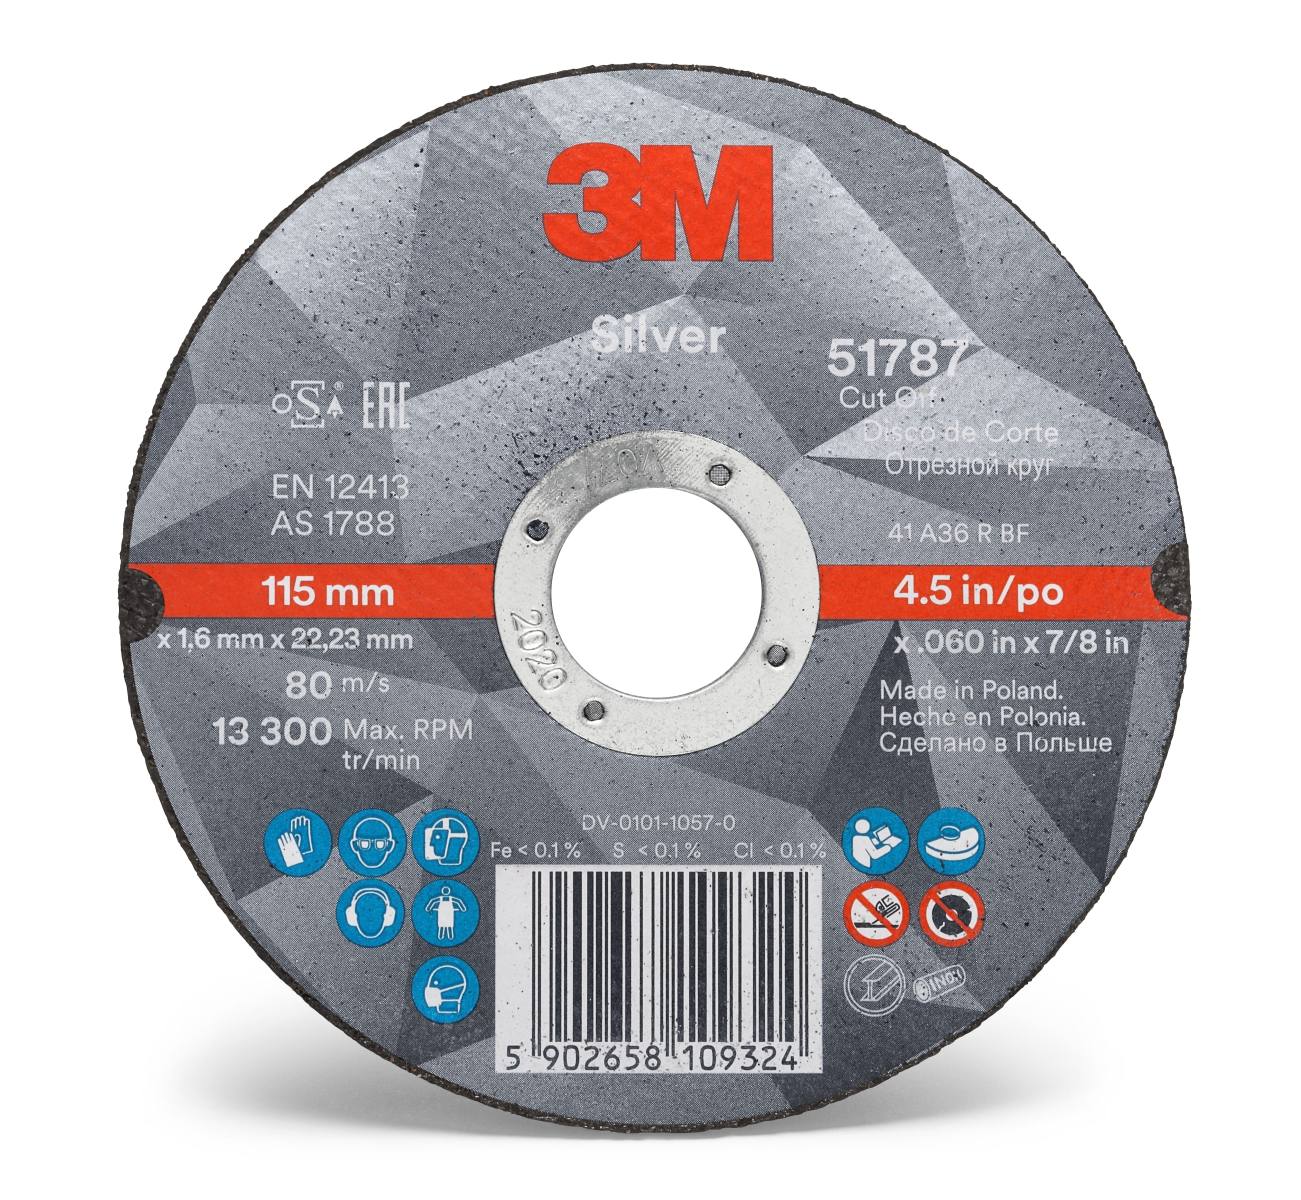 3M Silver Cut-Off Wheel Trennscheibe, 180 mm, 2,0 mm, 22,23 mm, T41, 51797